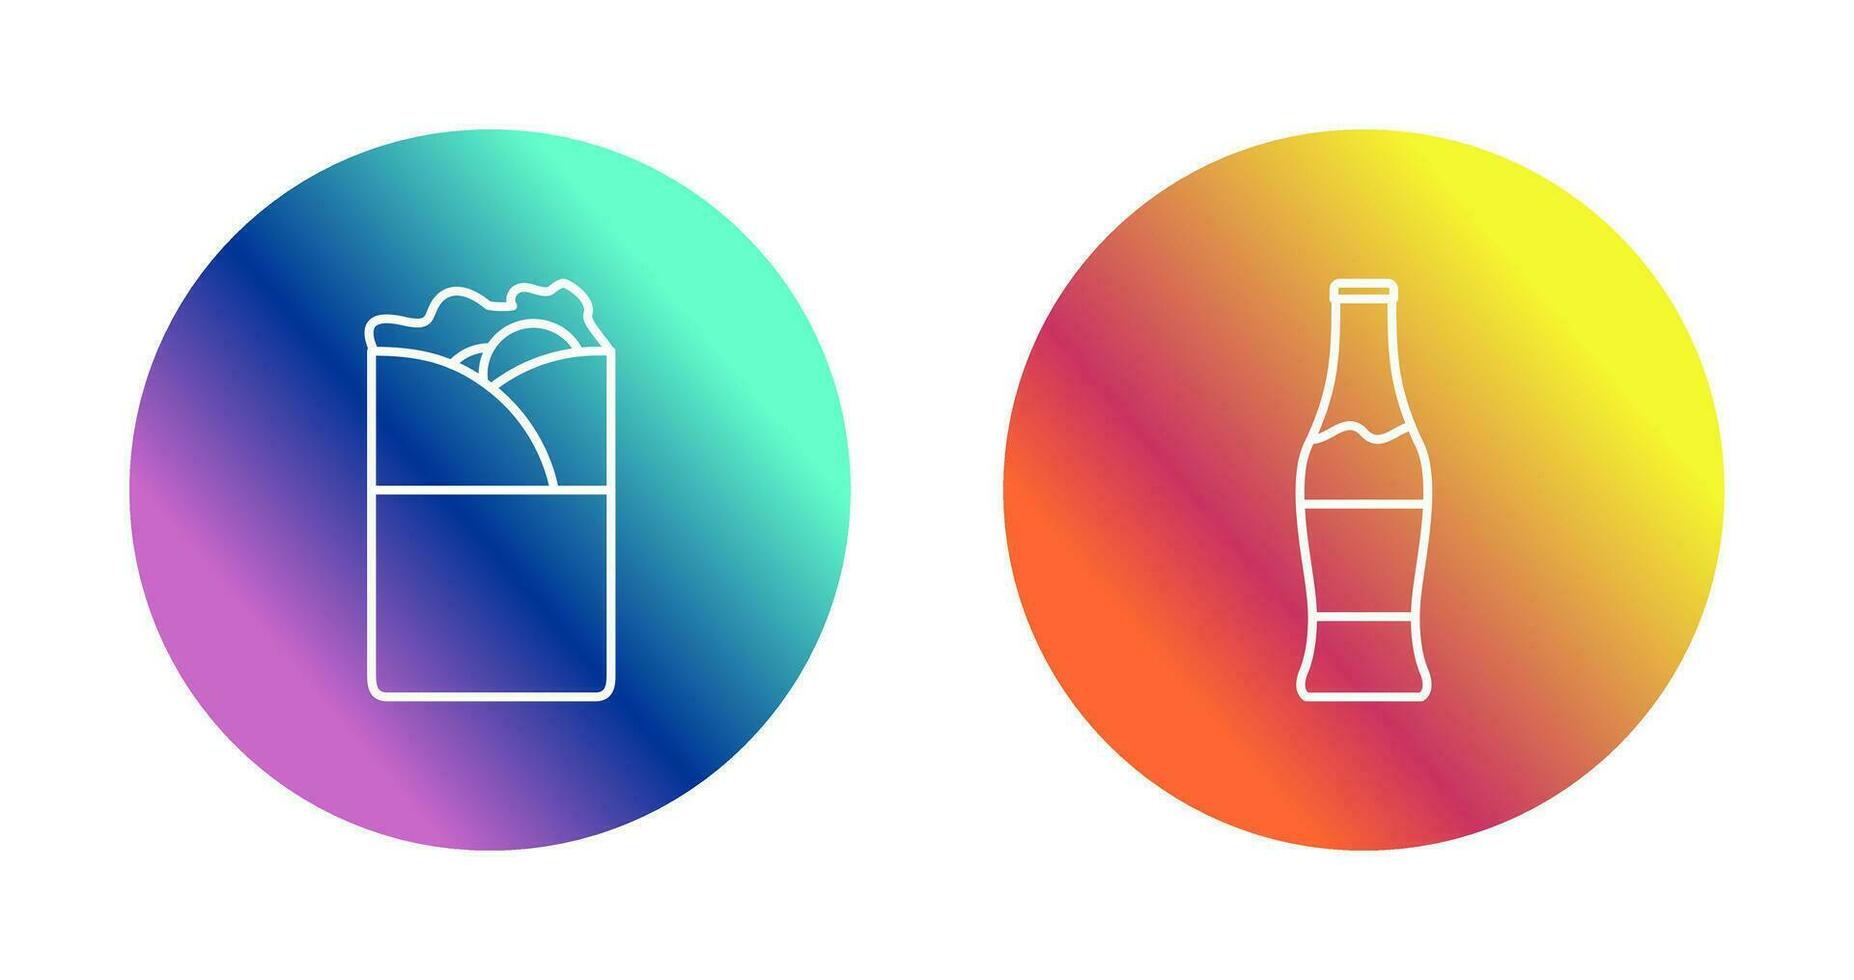 Kebab and Soda Icon vector